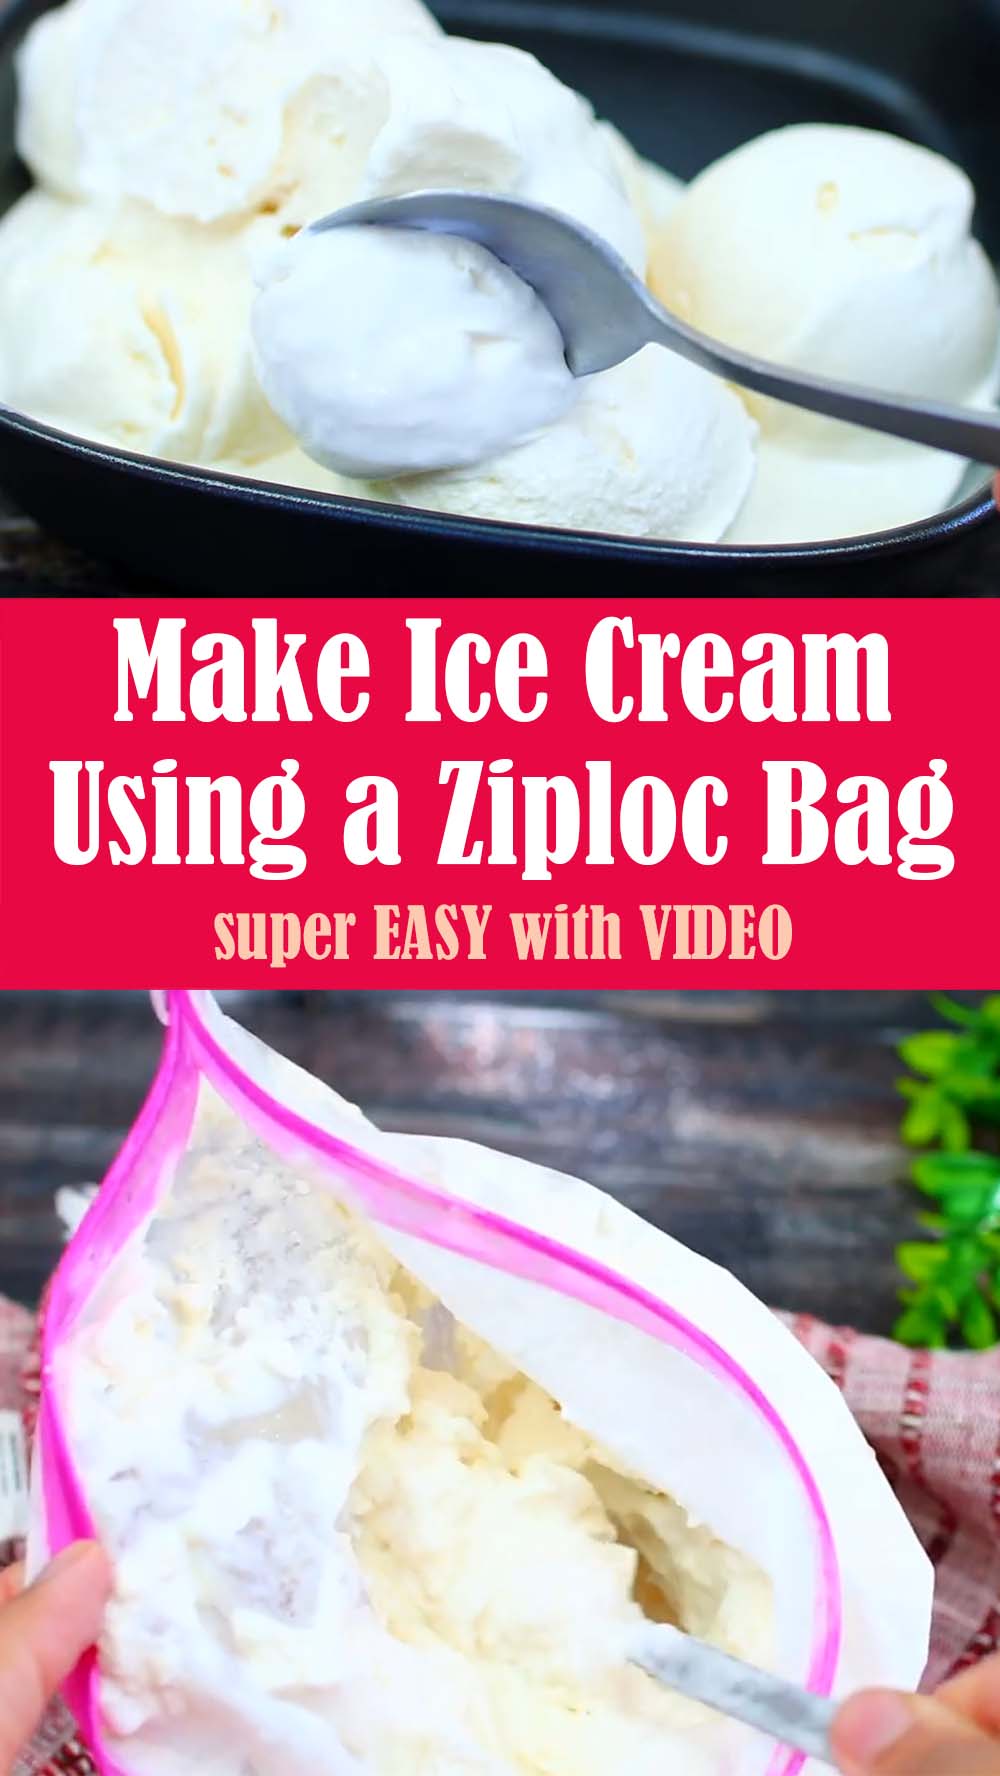 Make Ice Cream Using a Ziploc Bag